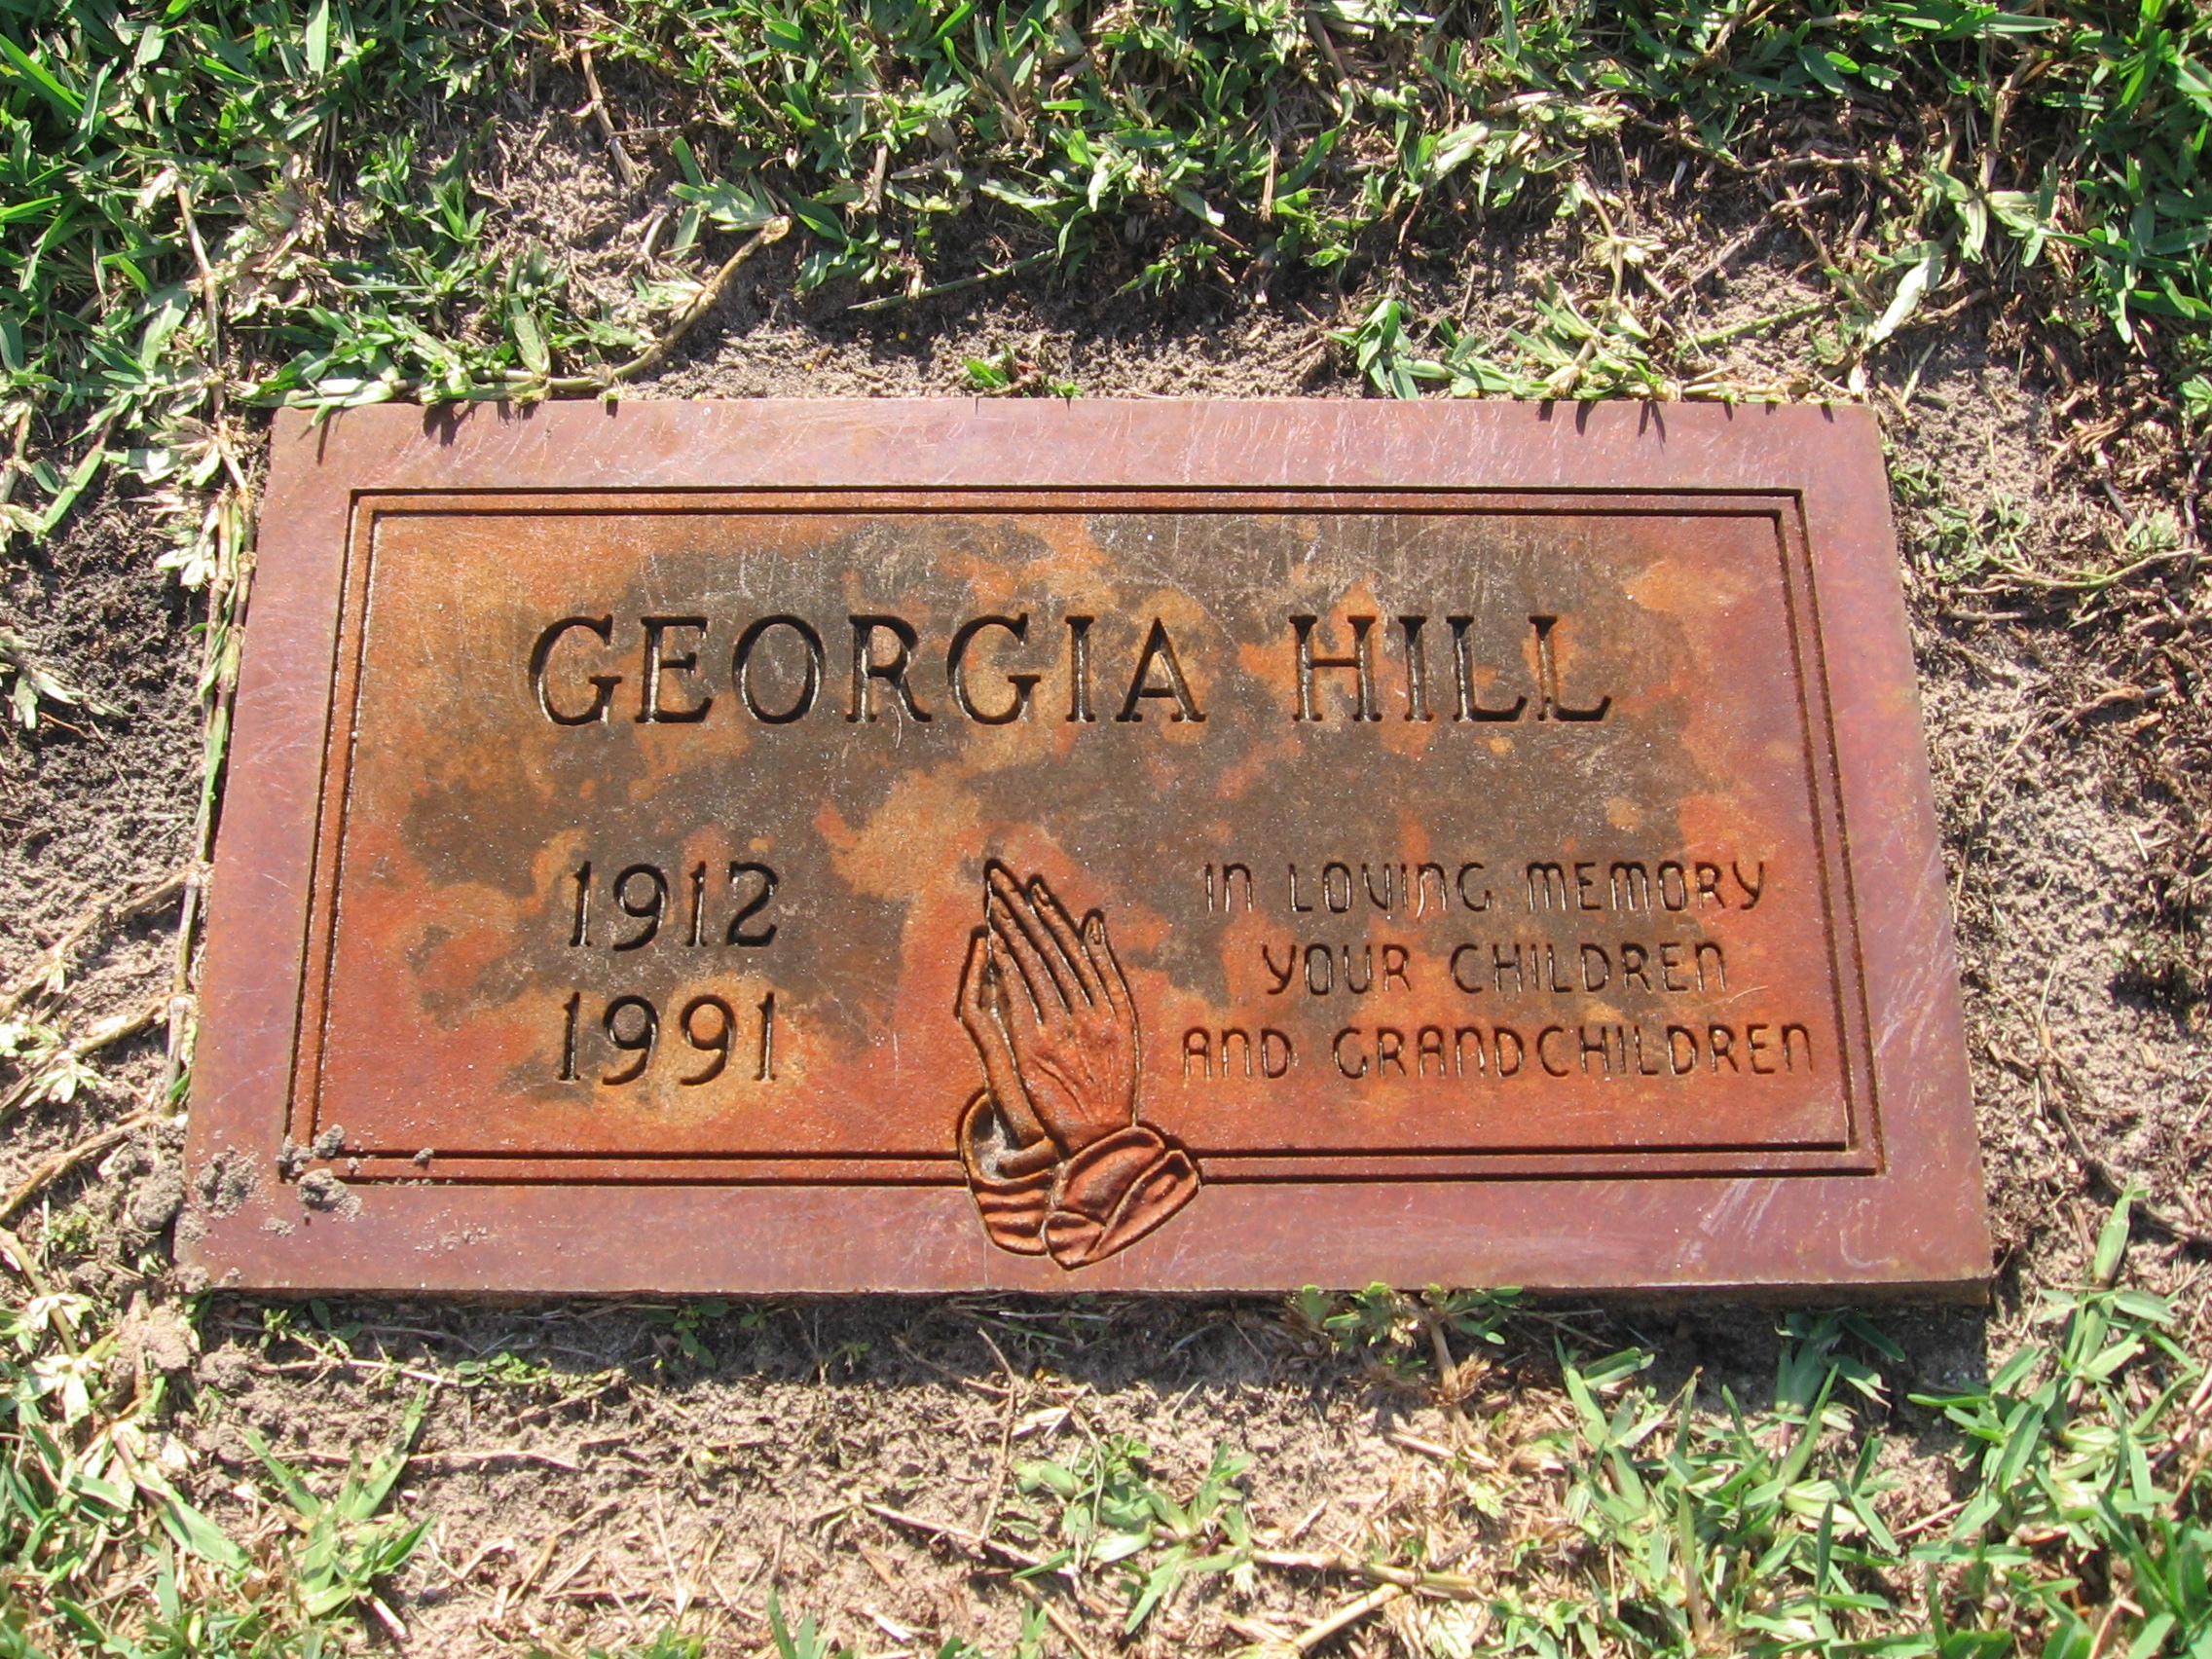 Georgia Hill